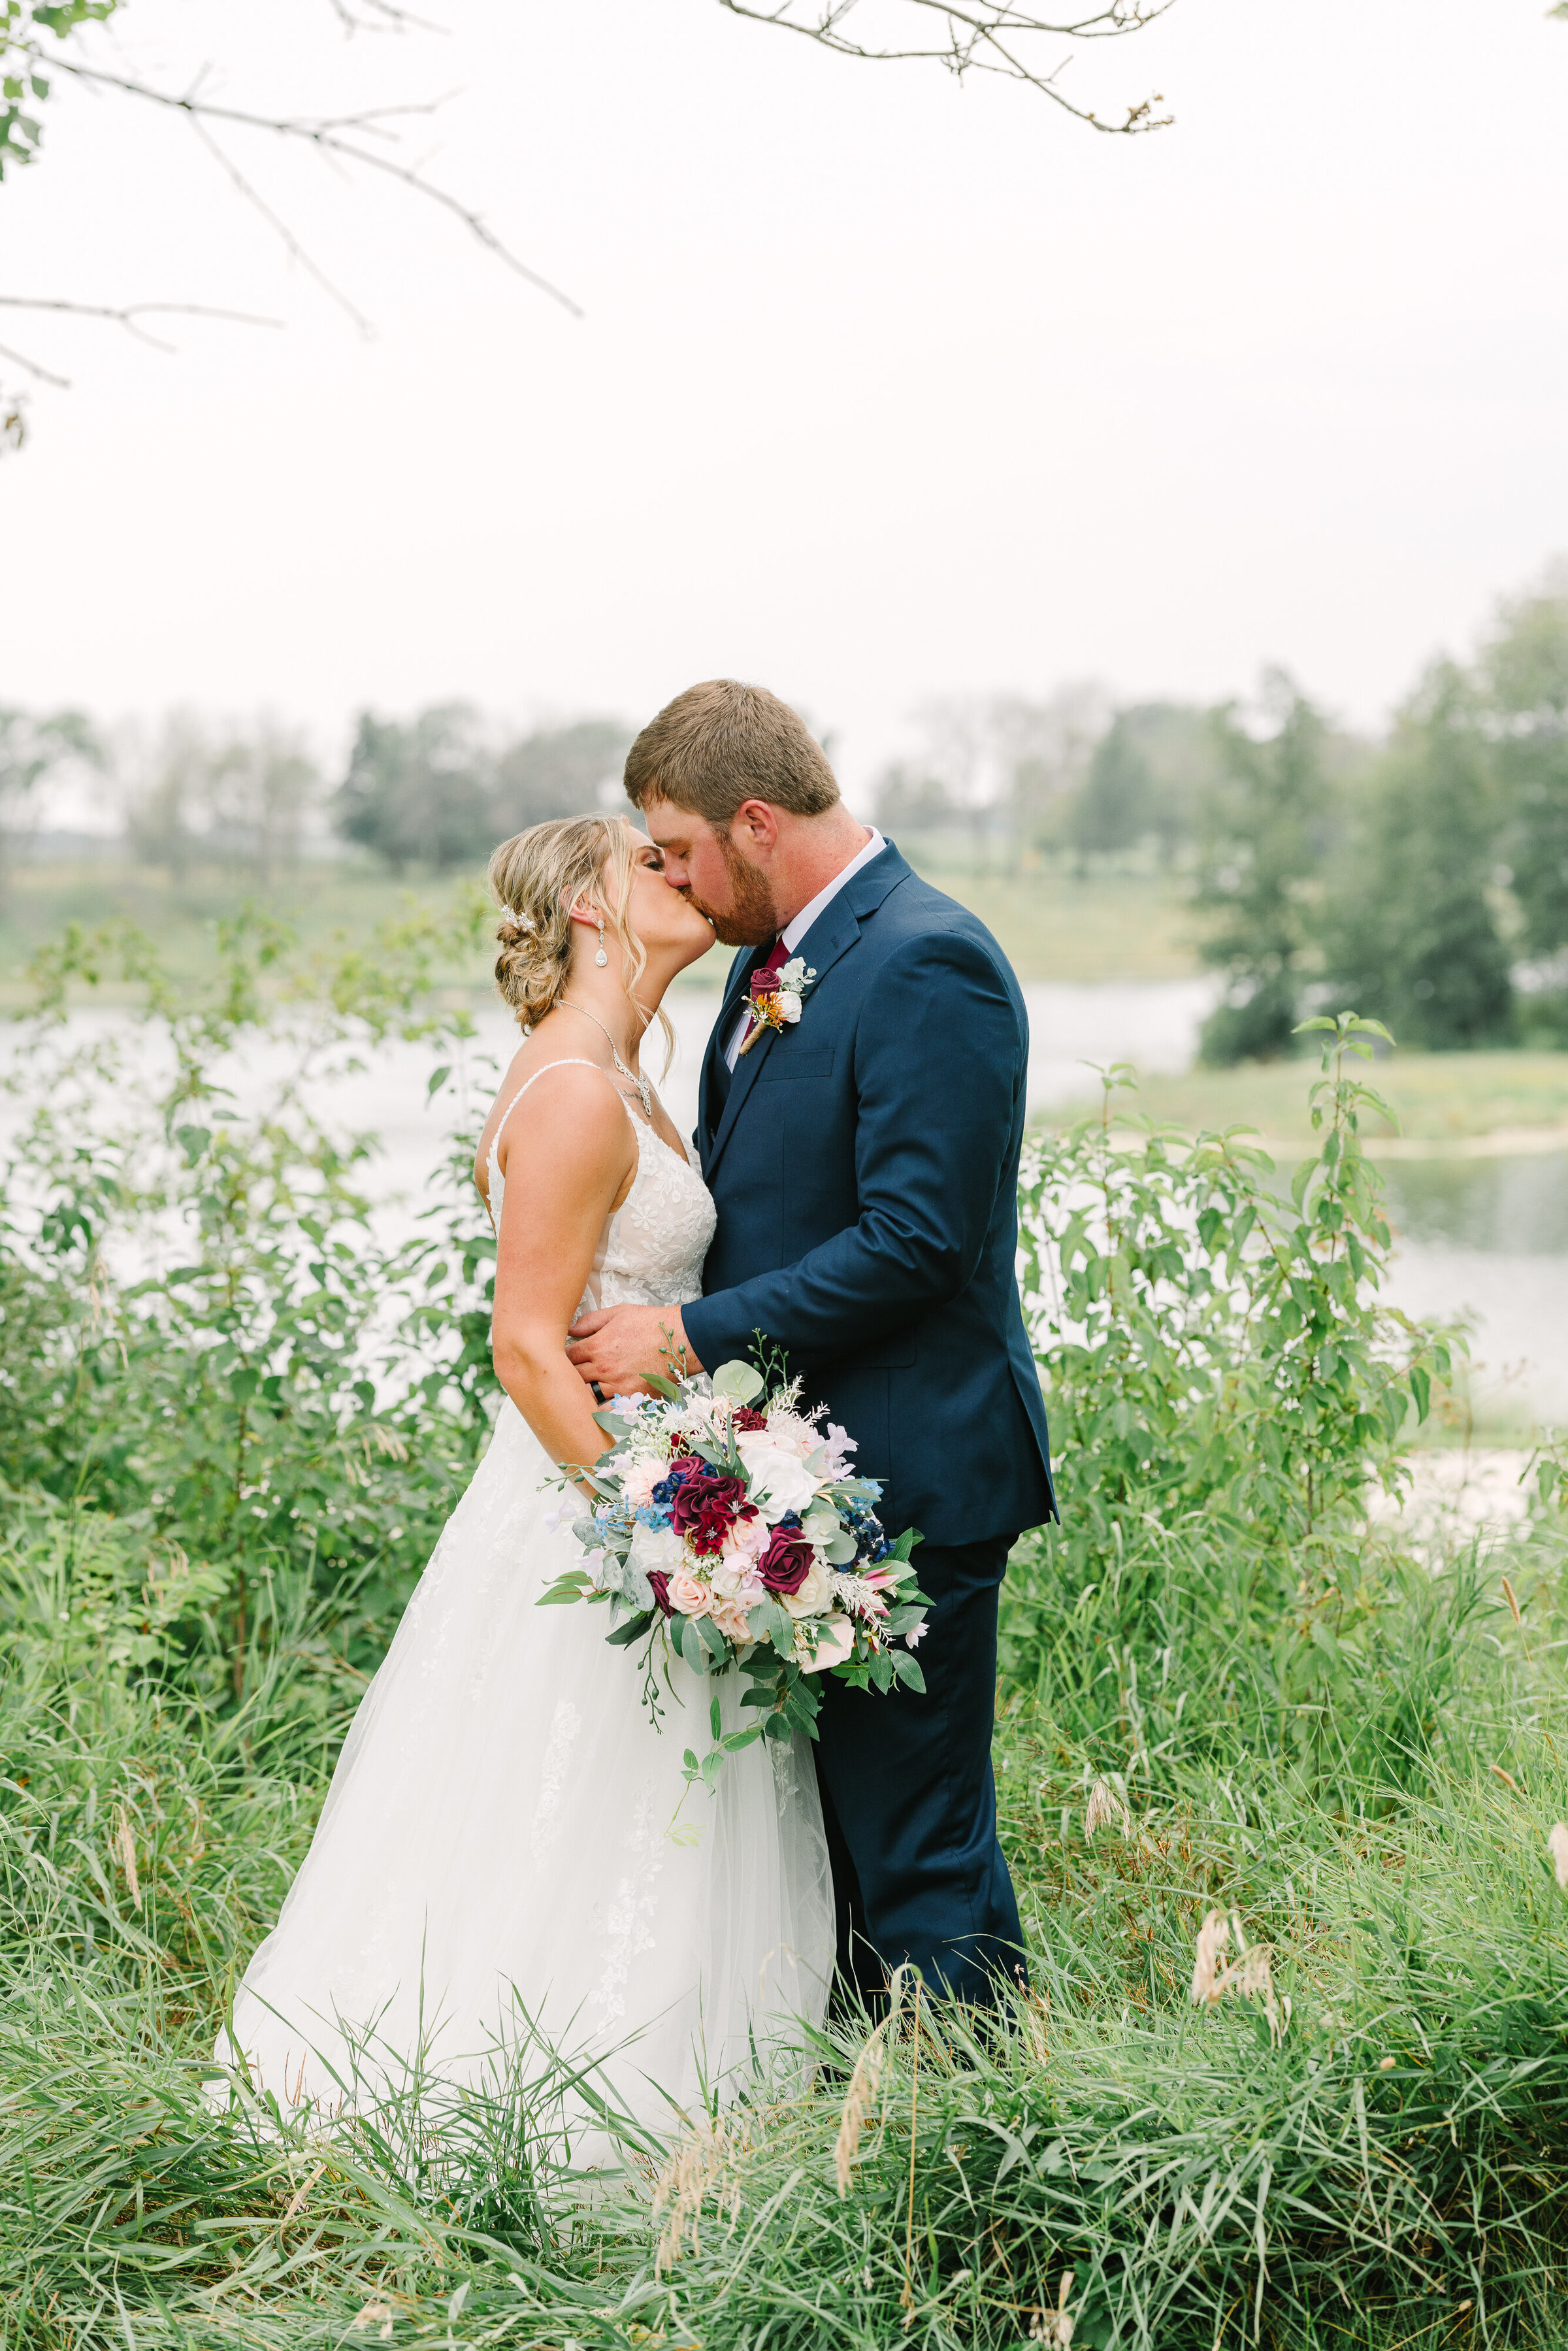 Carol-Selvy-Photography-Wedding-Photographer-Iowa-Midwest-9393